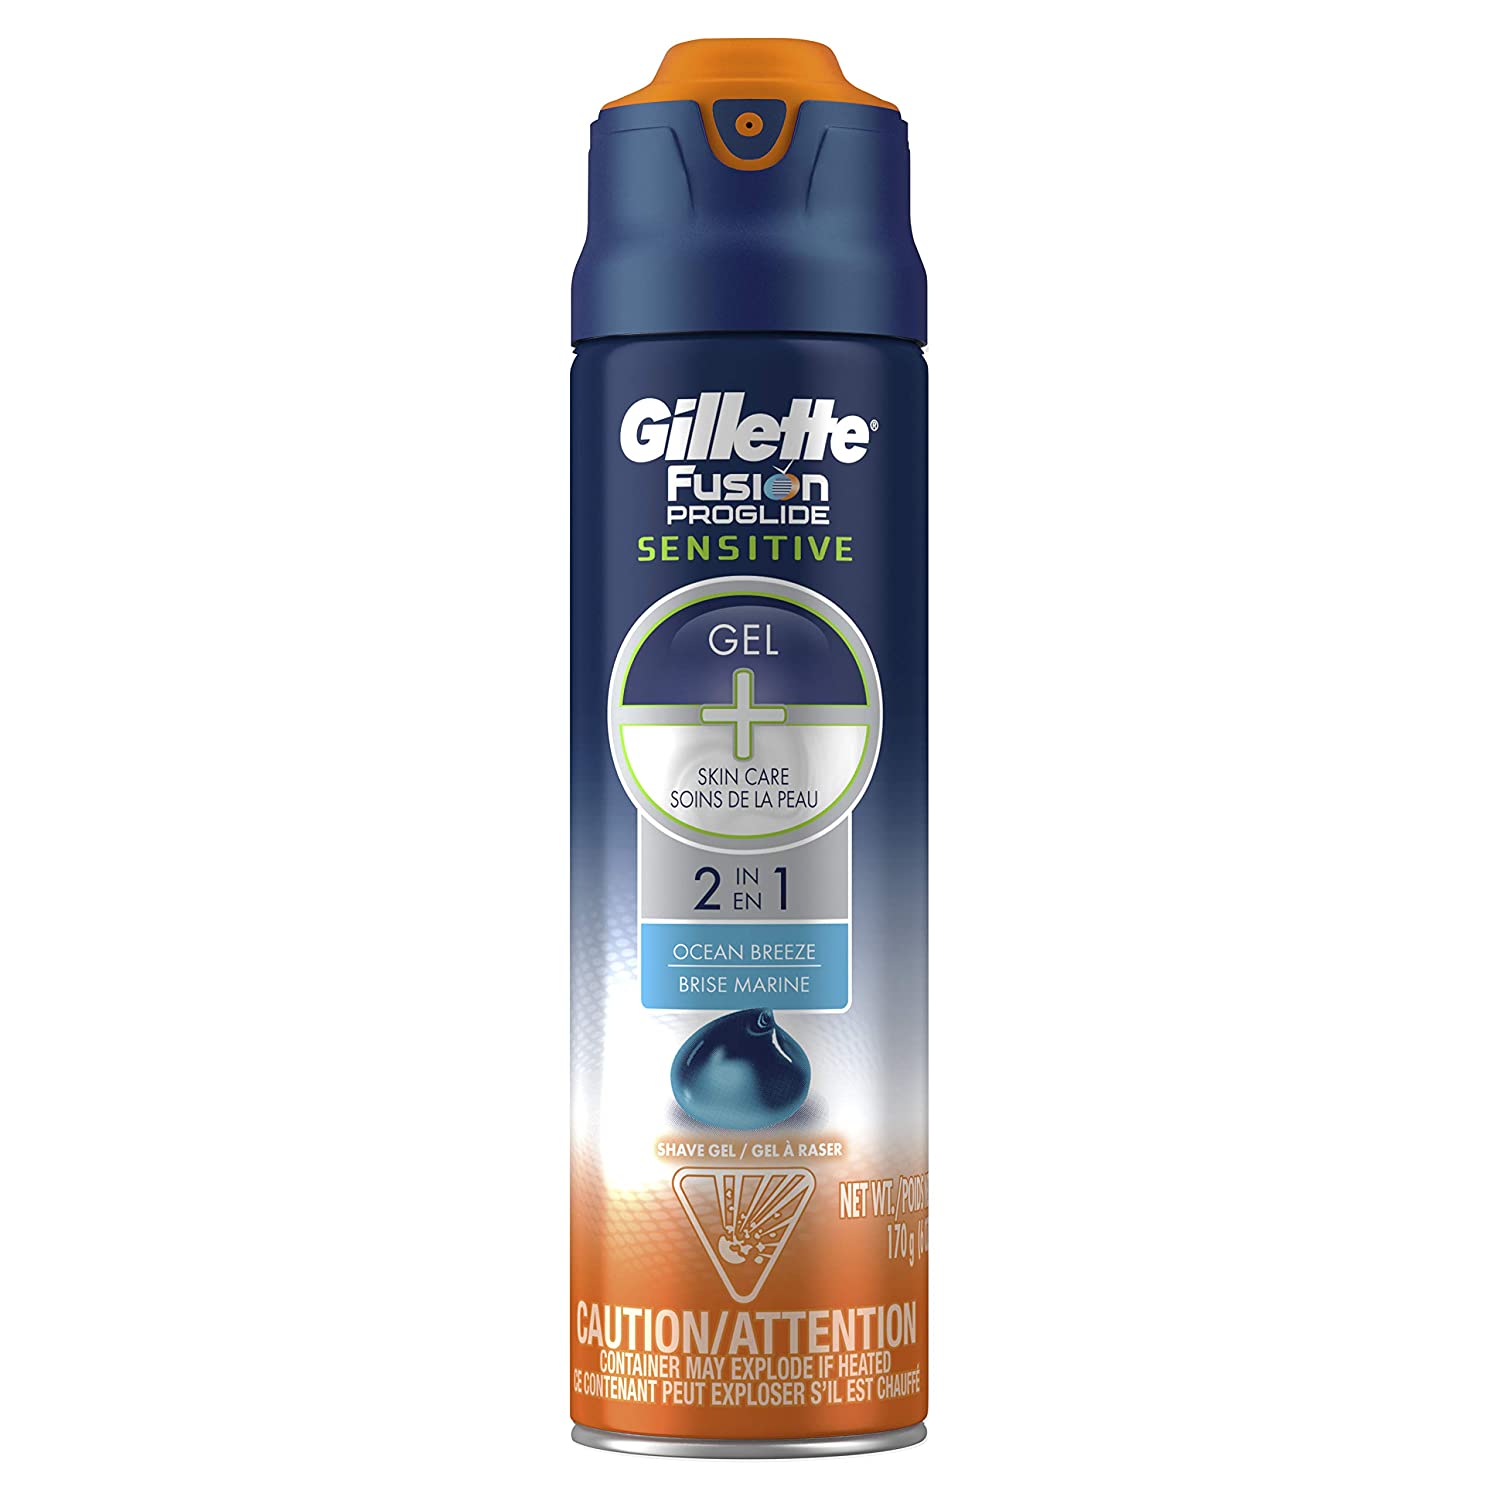 Gillette Fusion ProGlide Sensitive 2 in 1 Shave Gel, Ocean Breeze